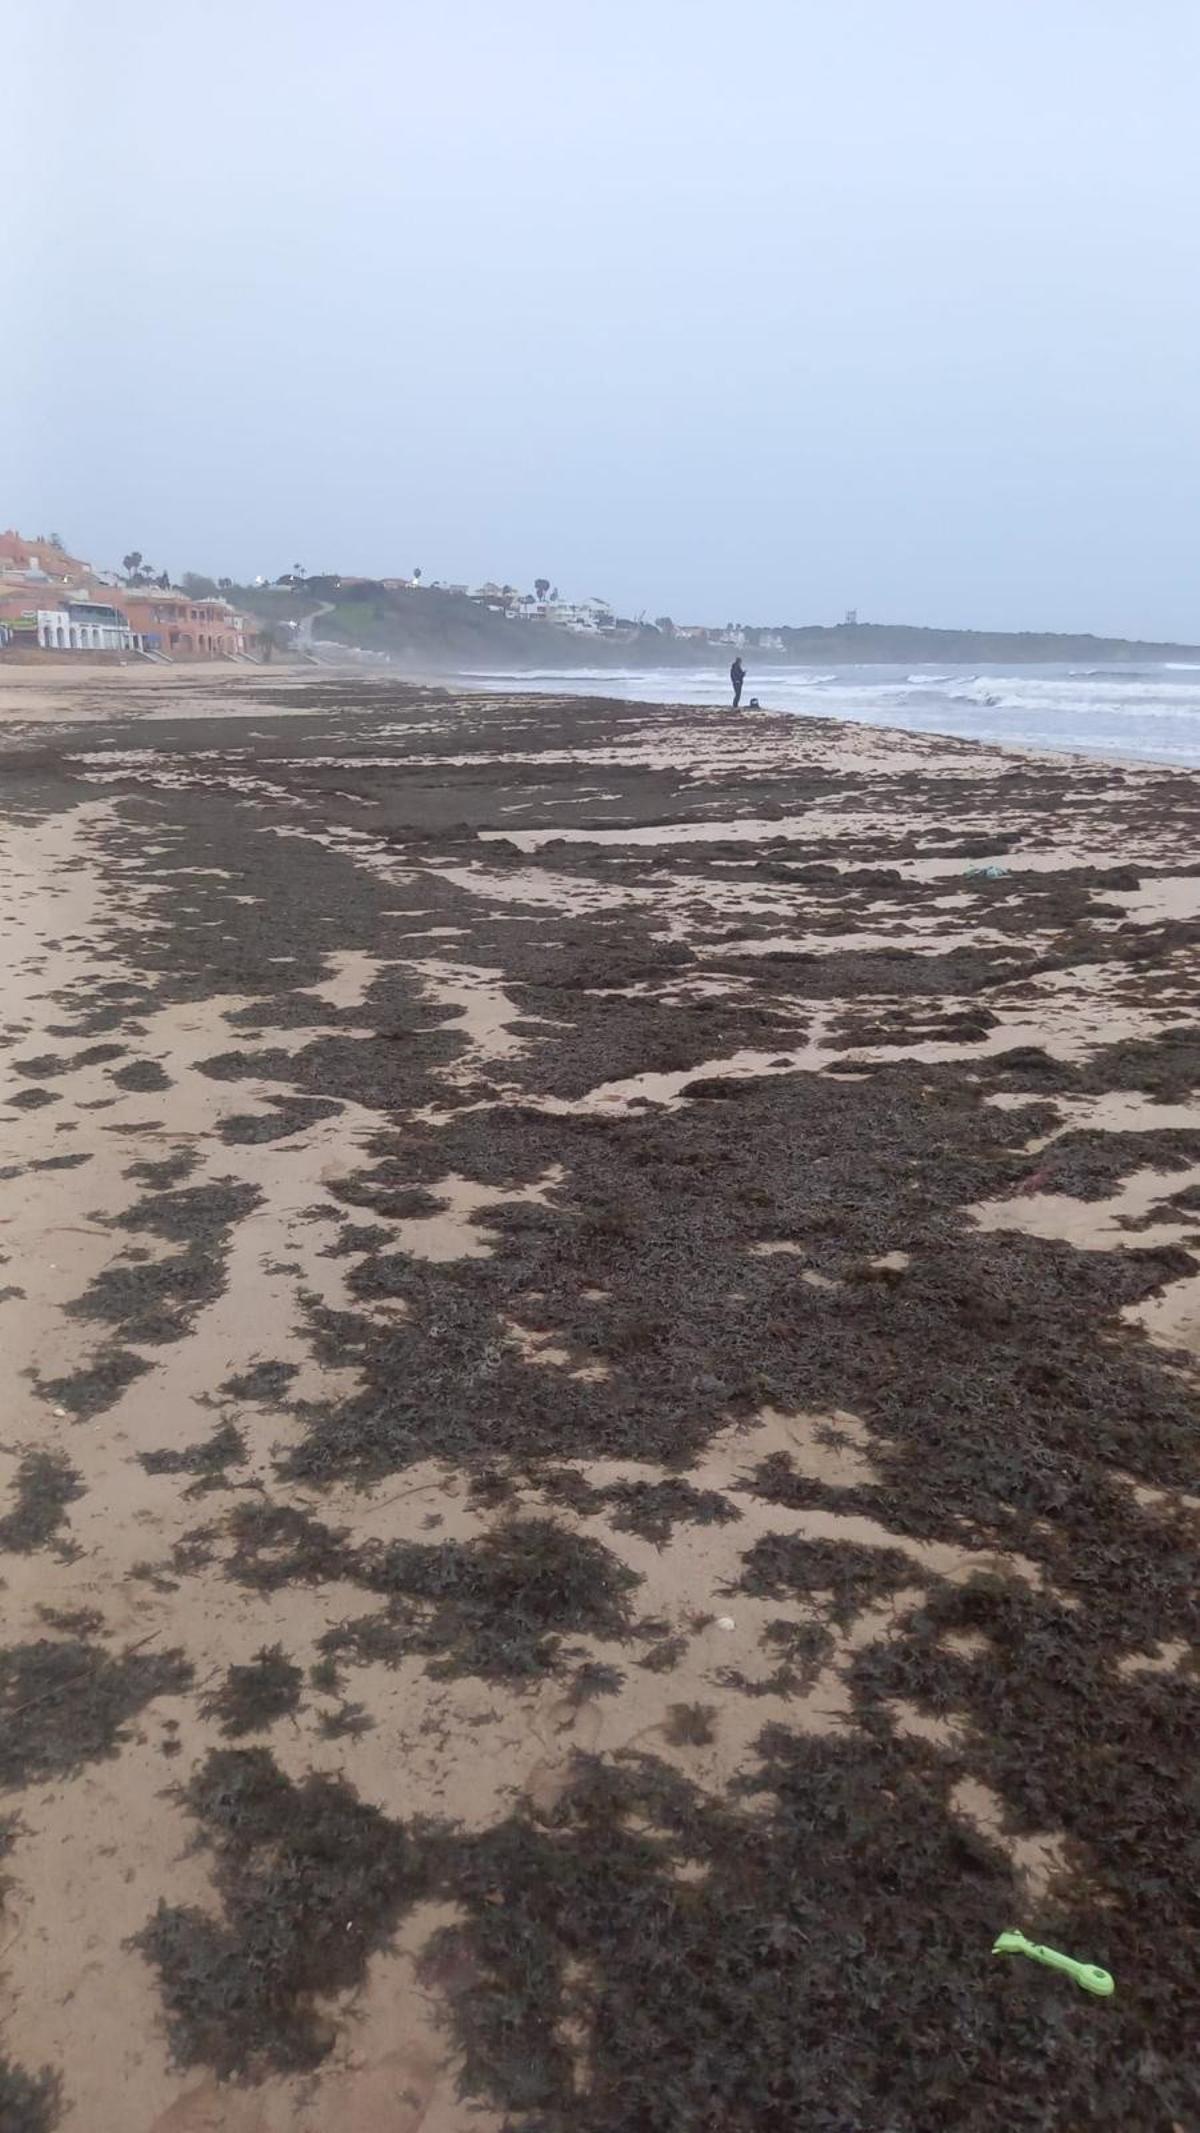 La playa de Getares de Algeciras (Cádiz) afectada por 'el alga invasora' con cantidades &quot;considerables&quot;.